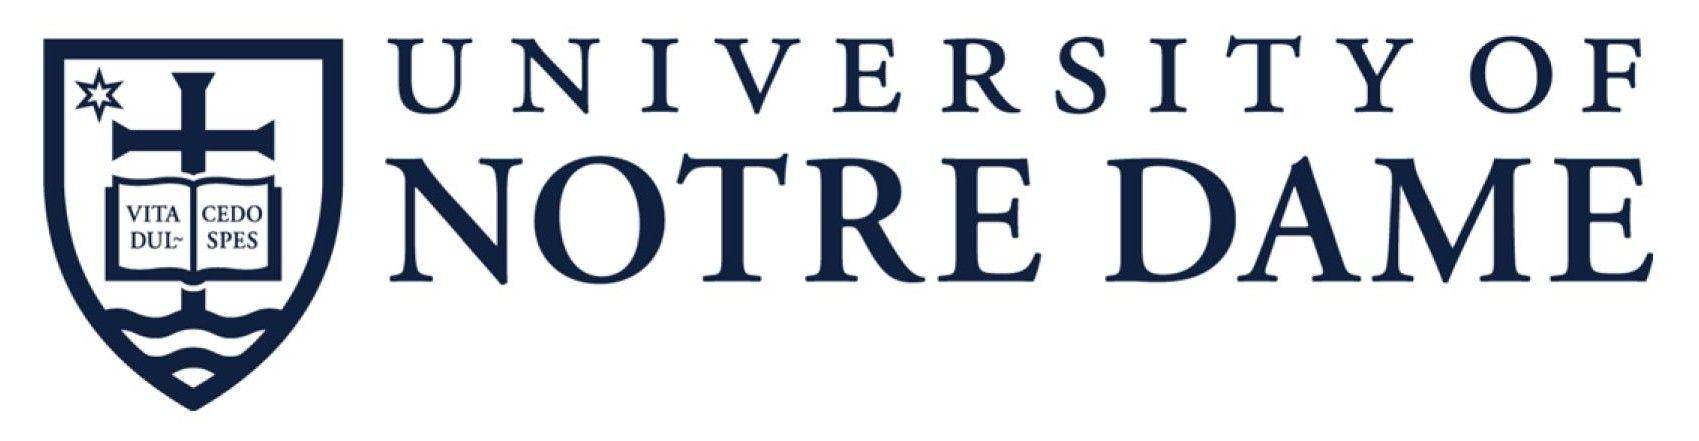 University of Notre Dame Logo - University of Notre Dame Logo. notre dame. Notre dame